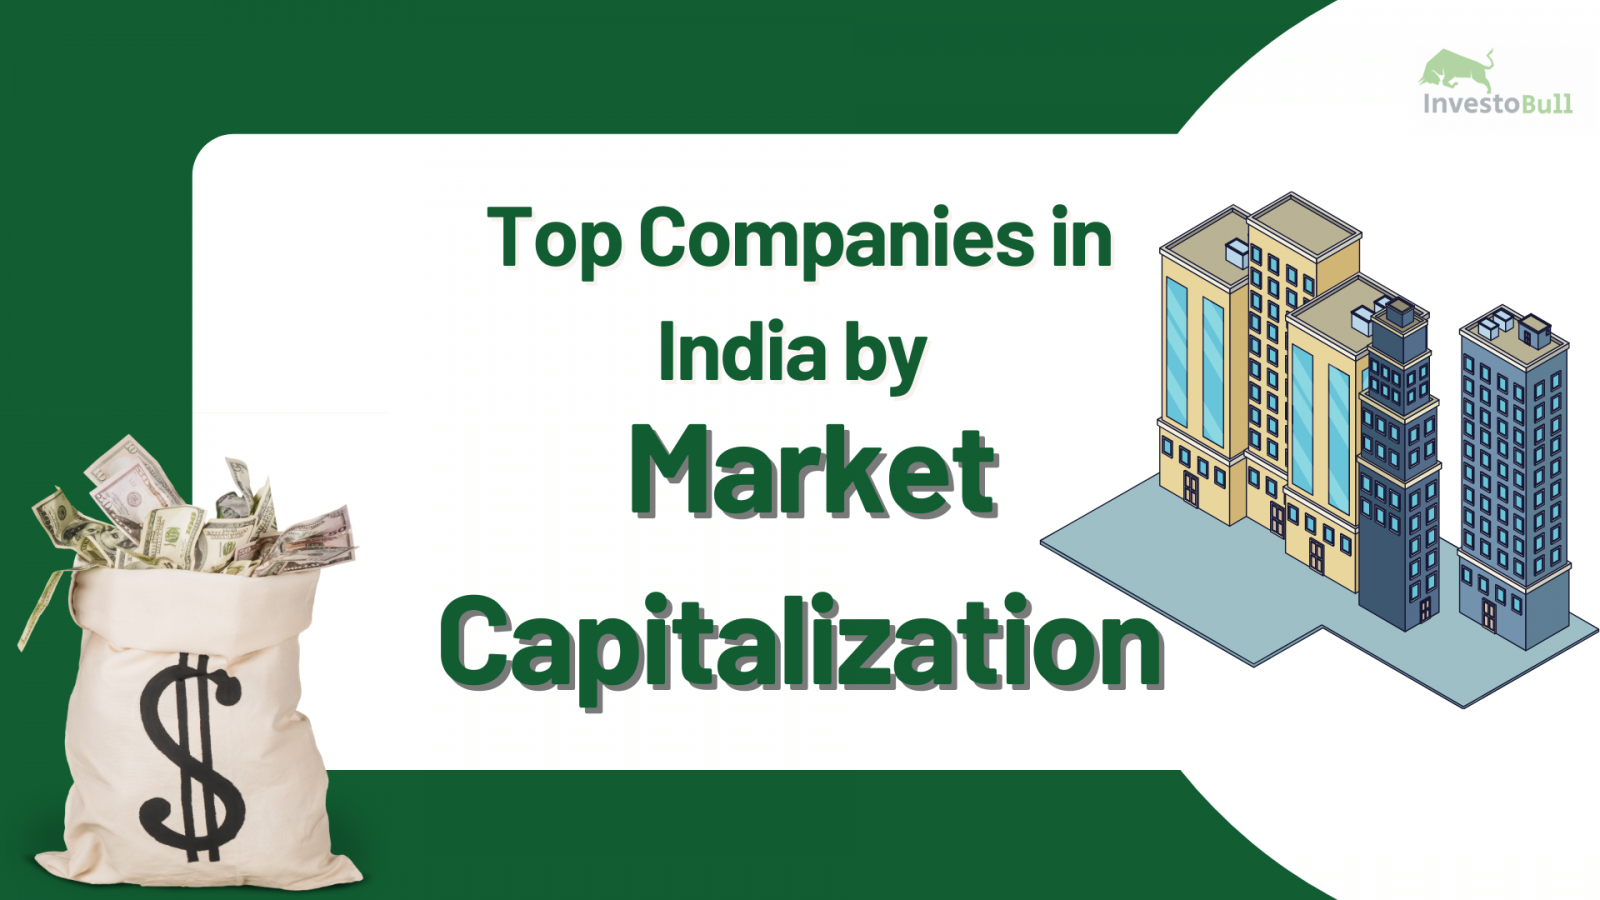 Top Market Capitalization Companies